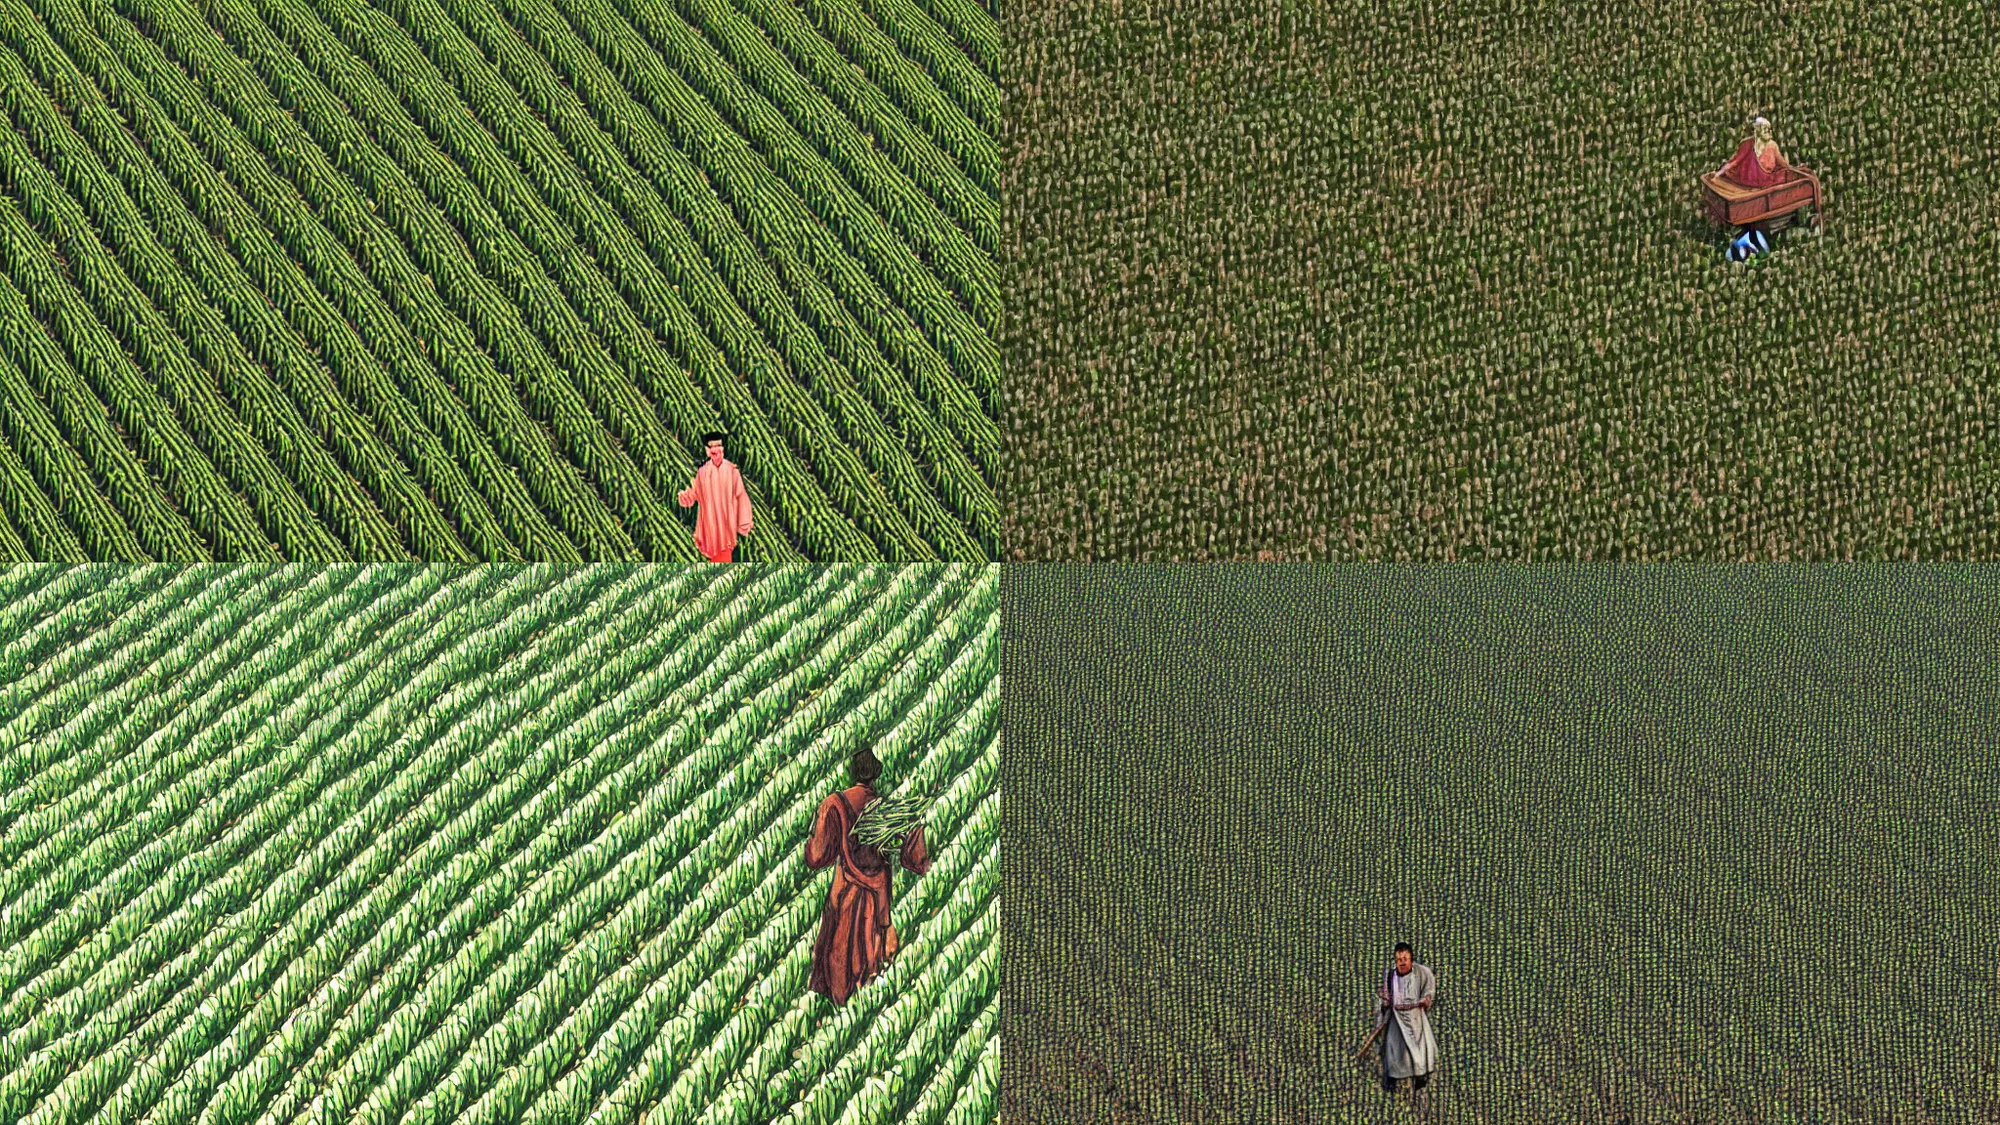 Prompt: gigachad farmer in immaculate rows of crops, digital xianxia art